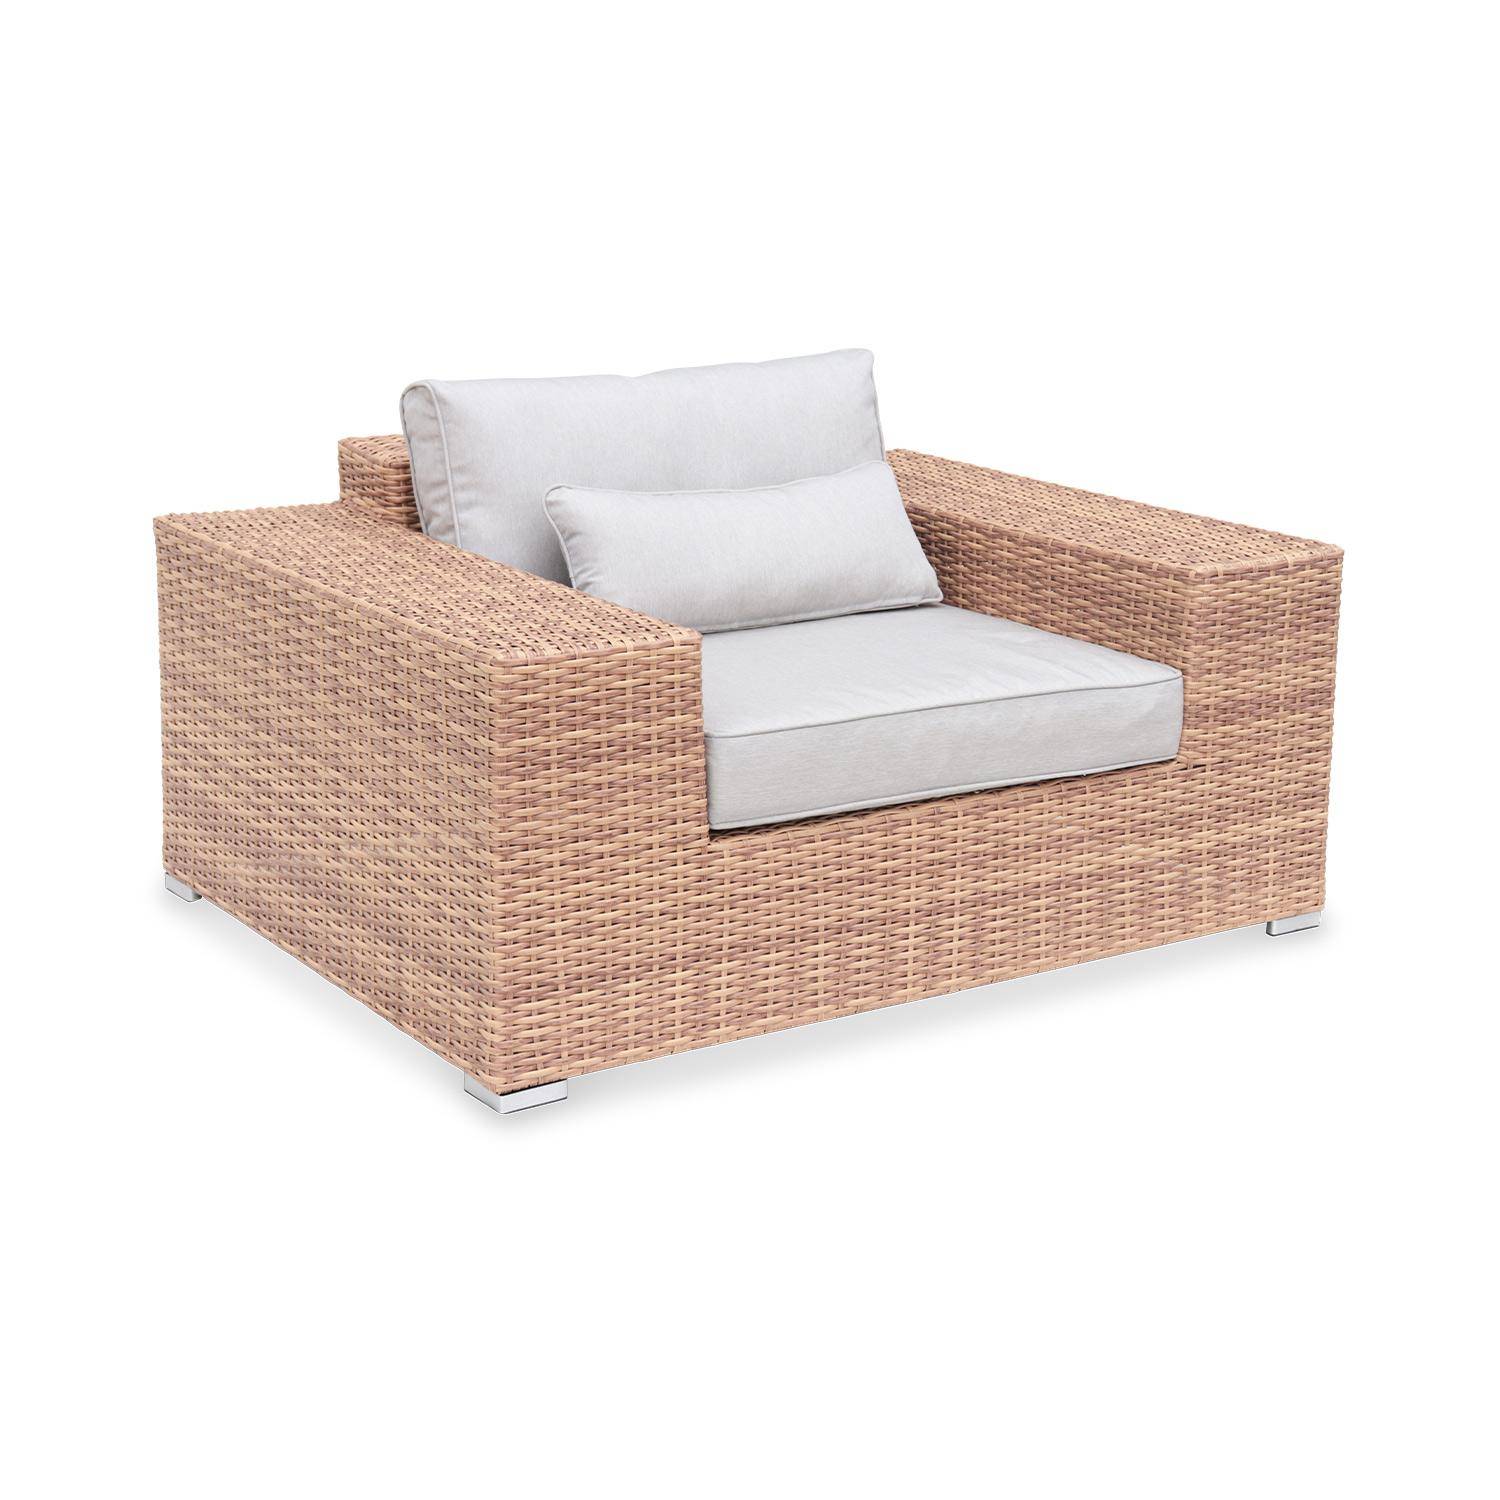 Extra-large 4-seater polyrattan garden sofa set - Sofa, 2 Armchairs, Coffee table - Gubbio - Beige,sweeek,Photo2